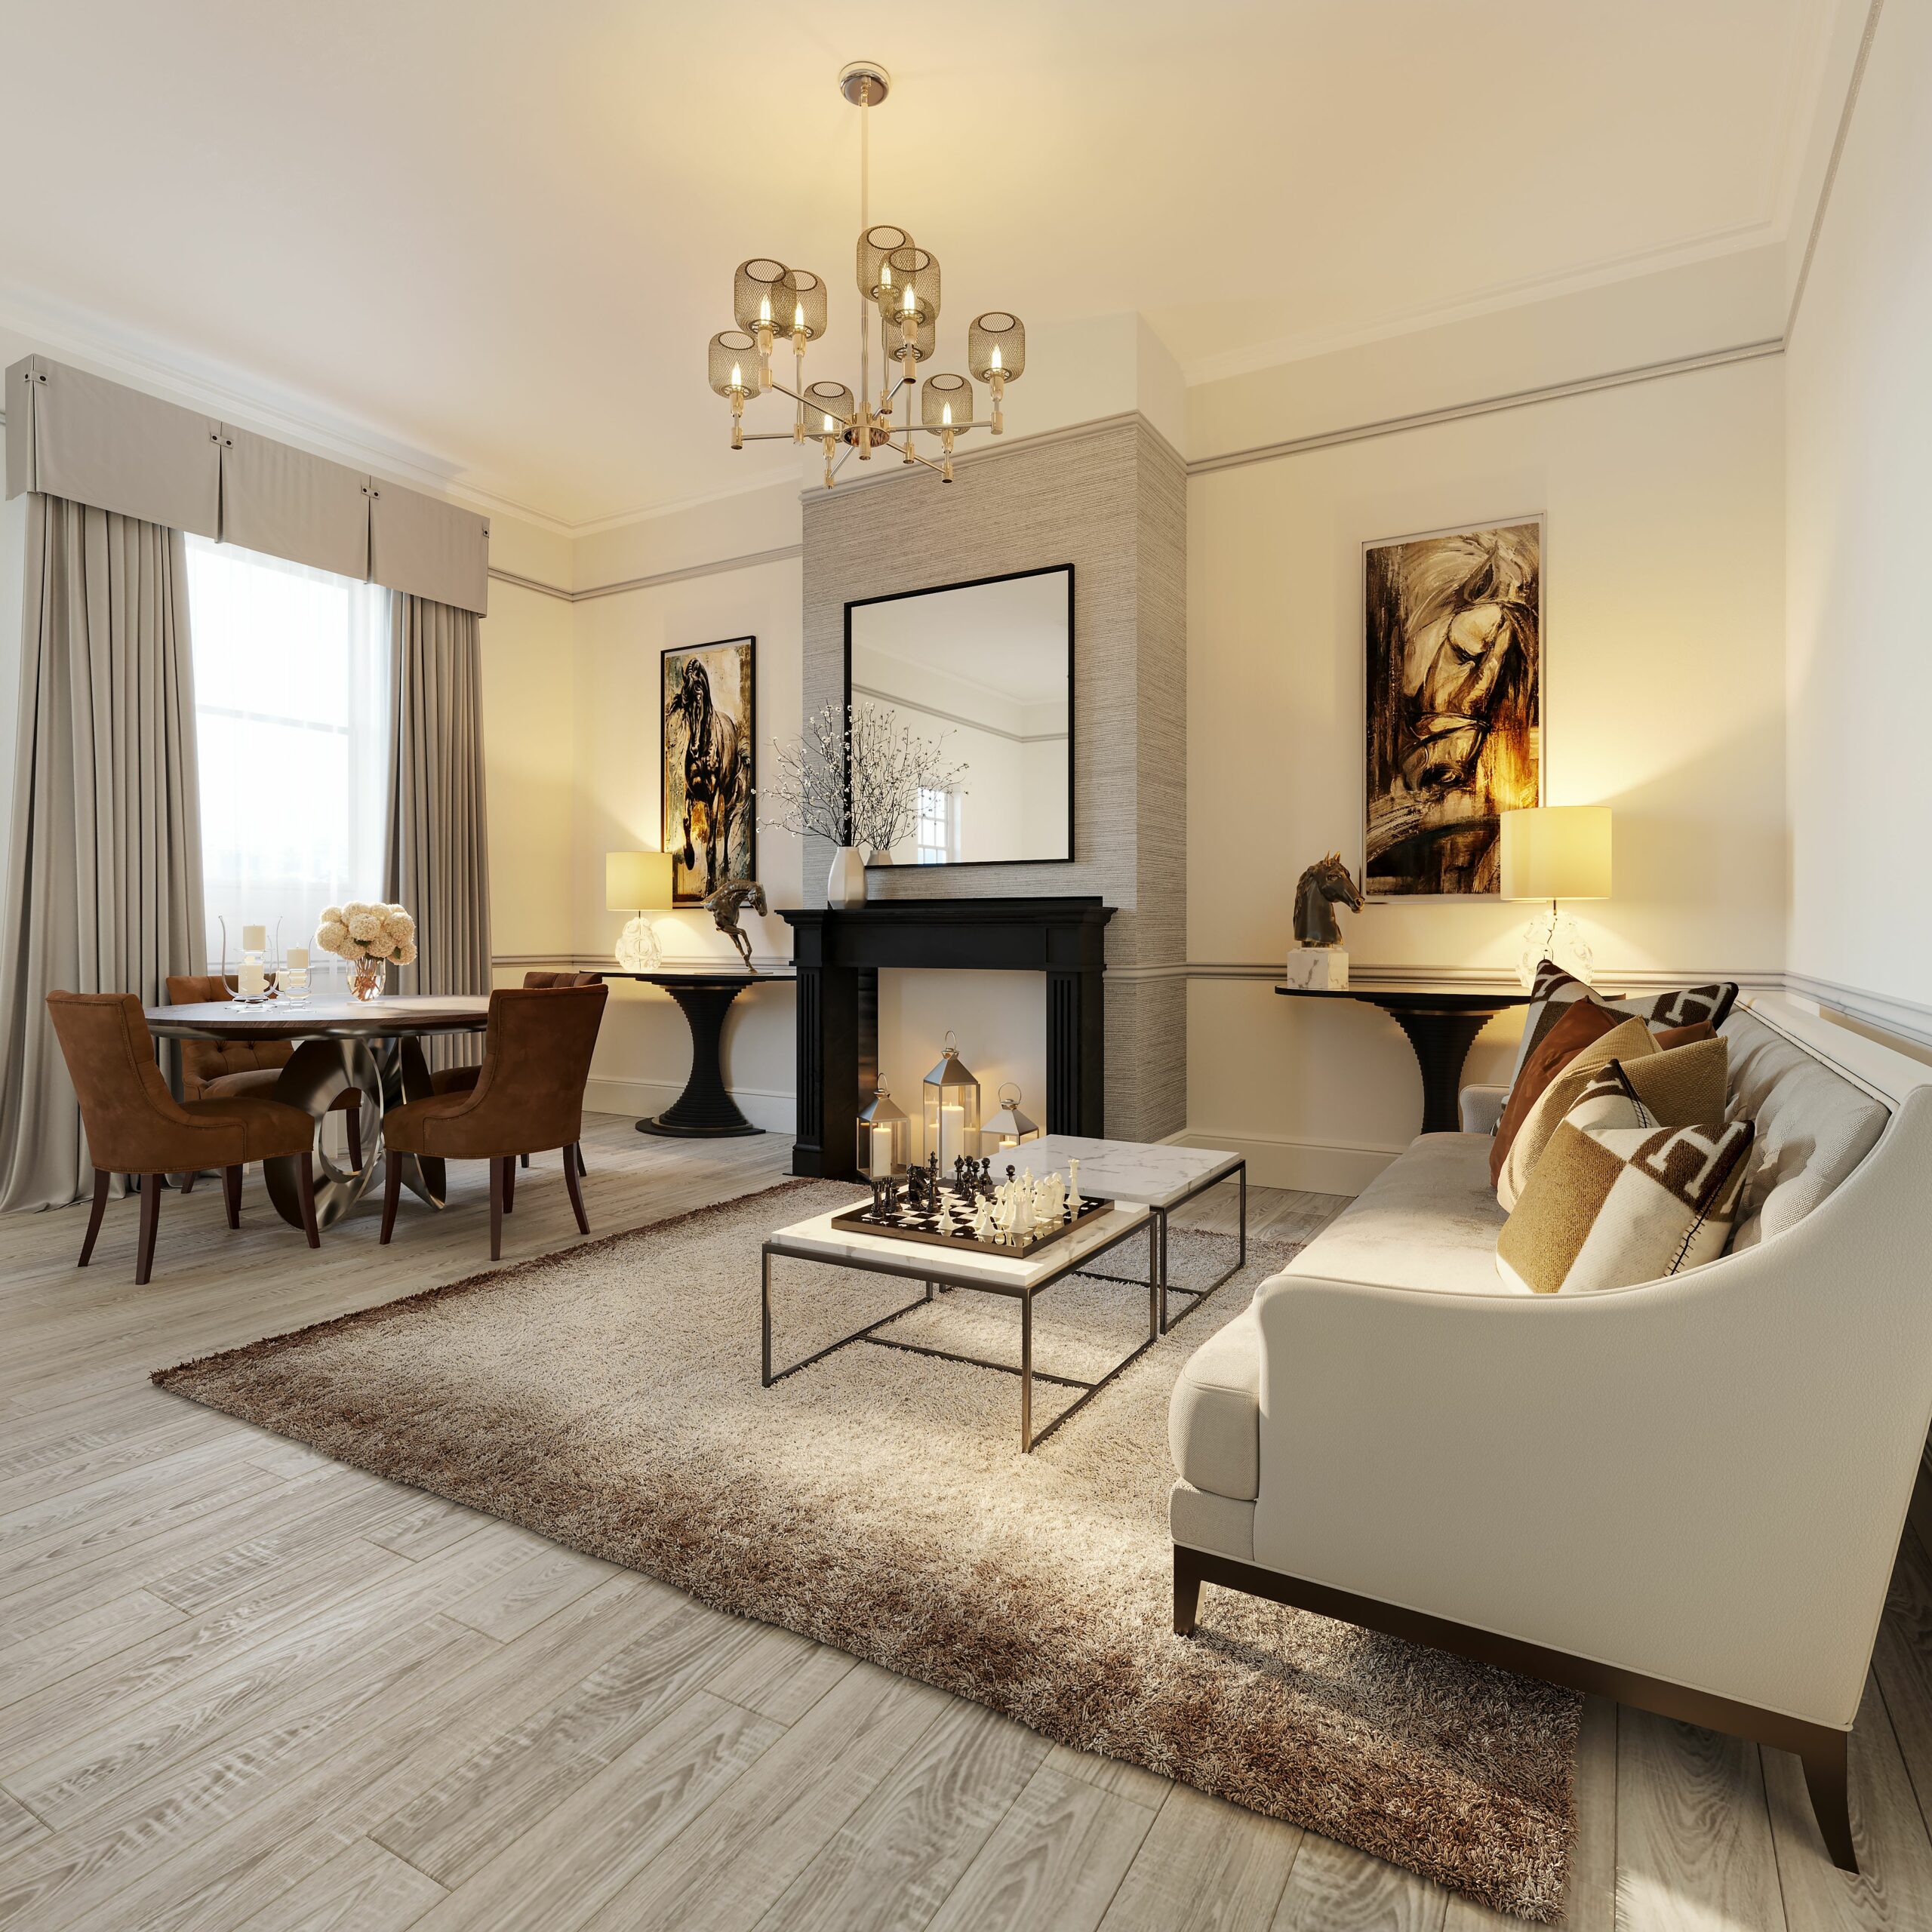 interior cgi living room 3d visualisation cheltenham lh1 global 